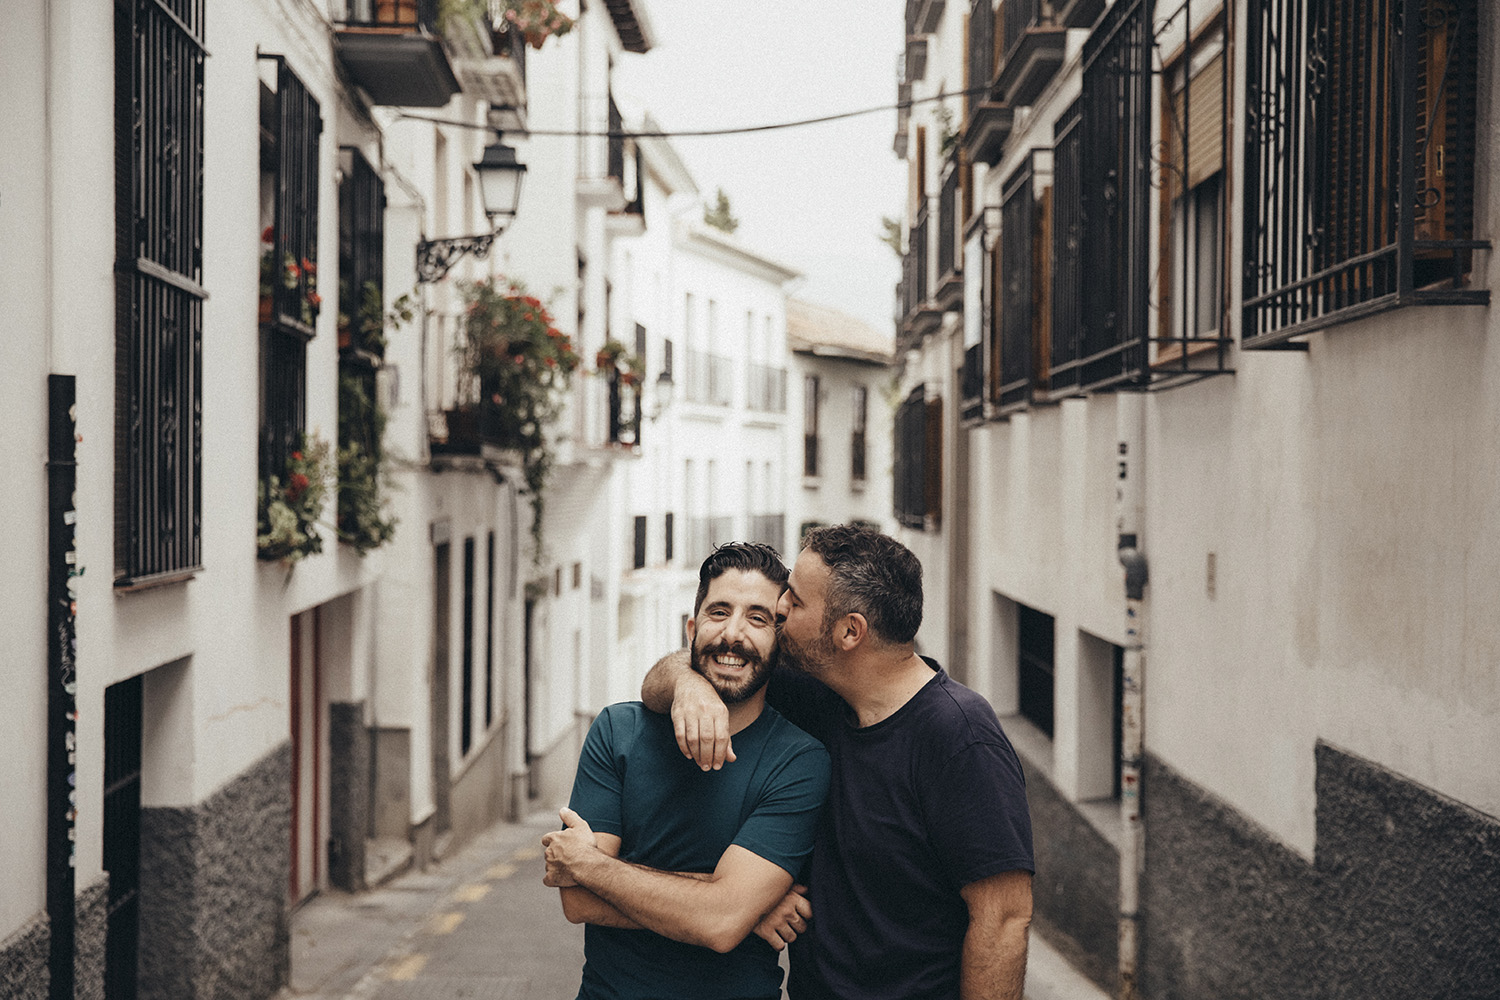 preboda-granada-serrallo-fotografo-boda-lgtb-gay-Jose_Reyes-02.jpg